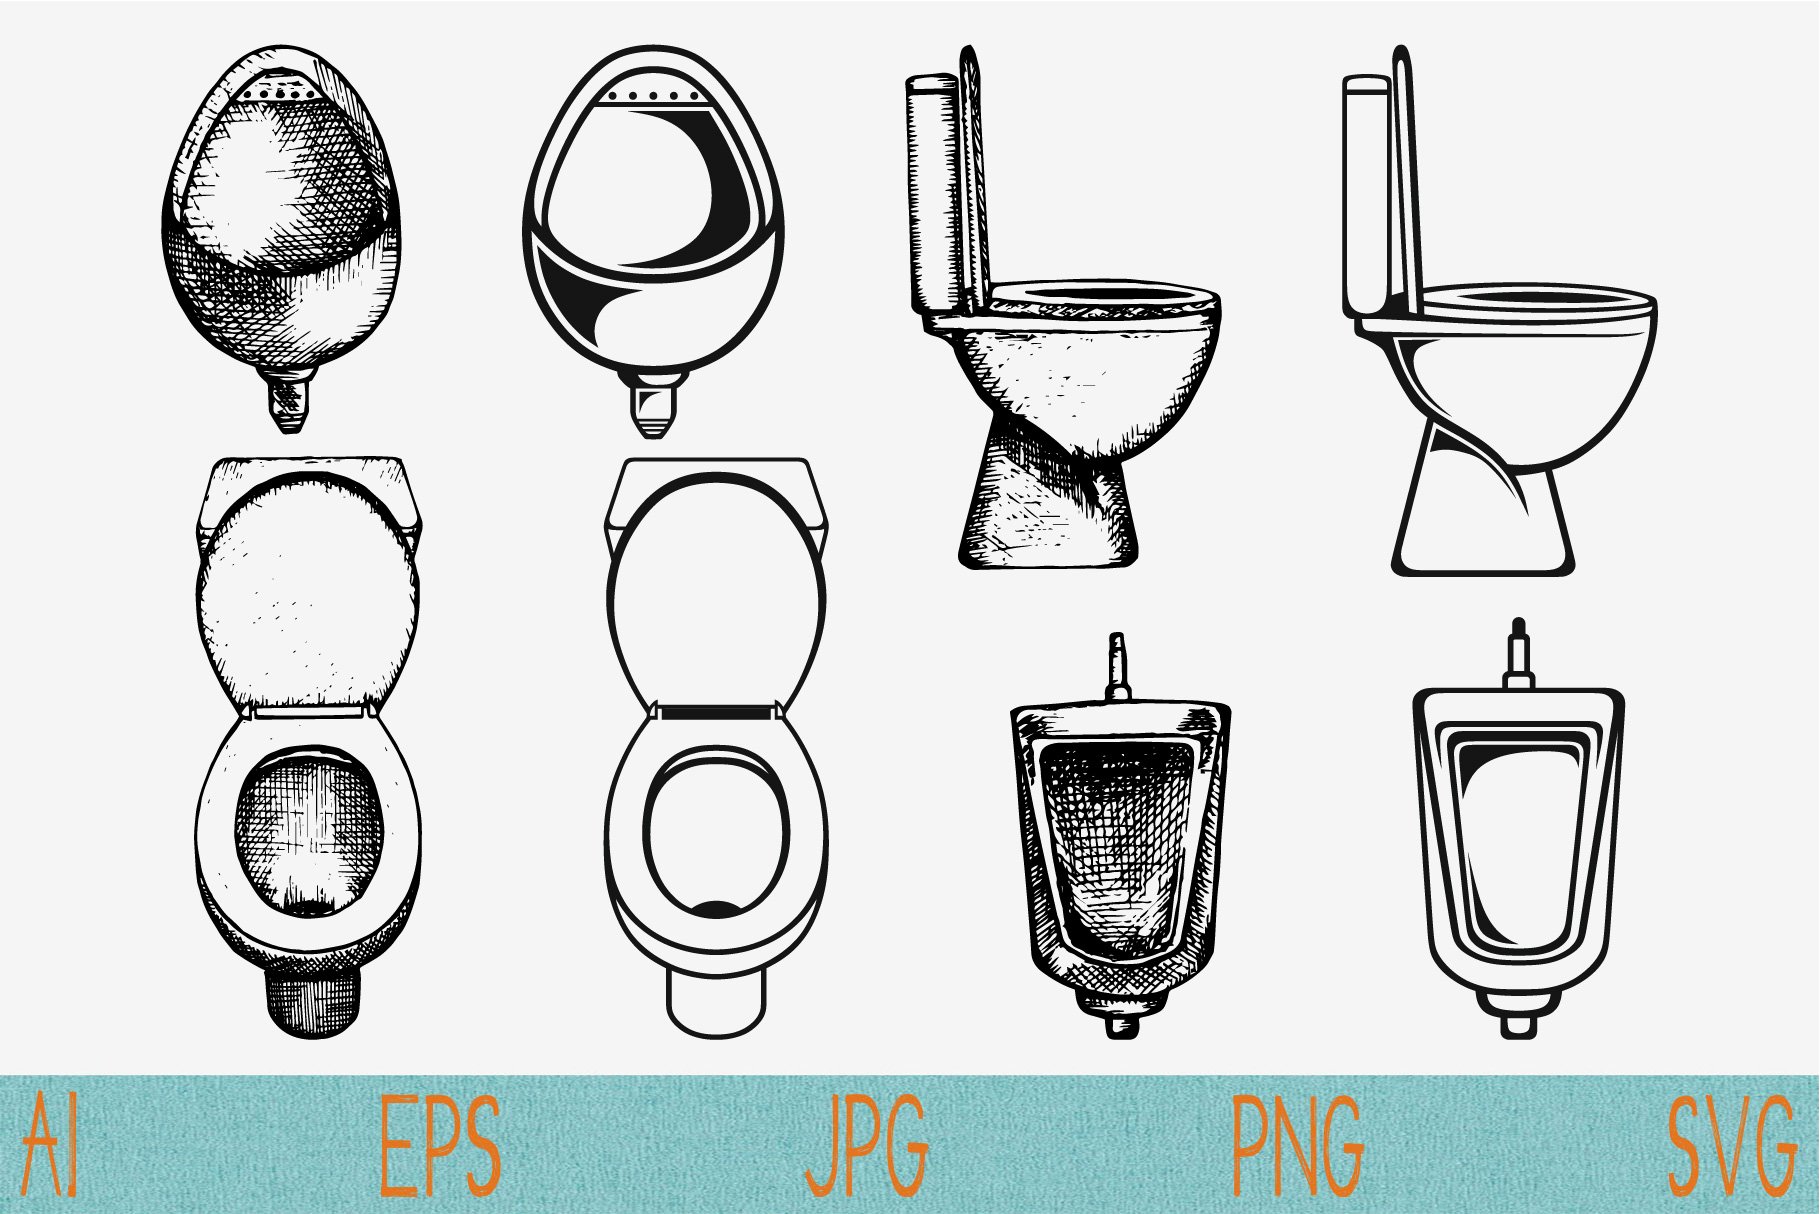 toilet bowl, urinal men's bathroom cover image.